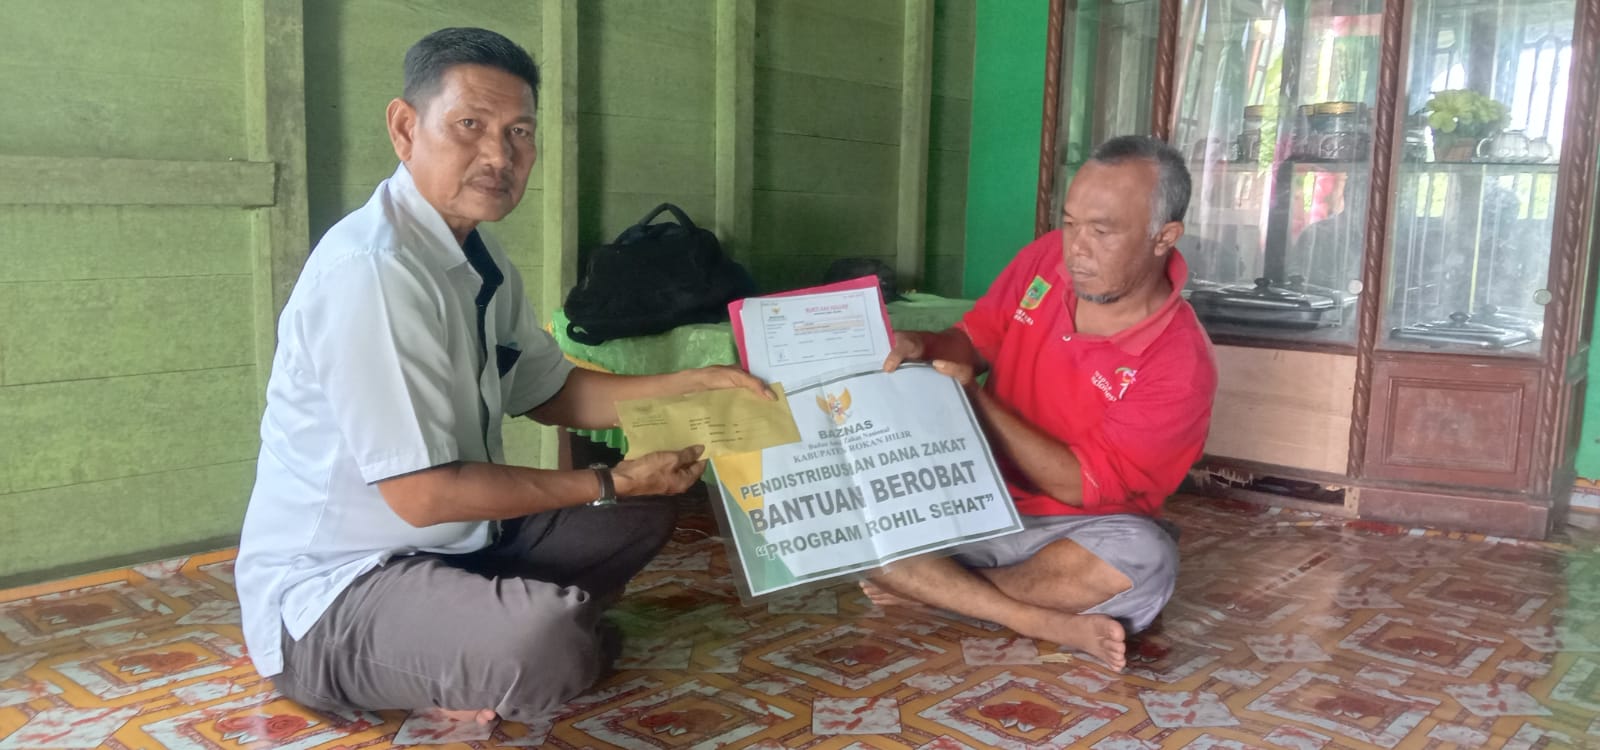 Baznas Rohil Serahkan Bantuan Berobat Program Rohil Sehat ke Wartawan Indra Syarip